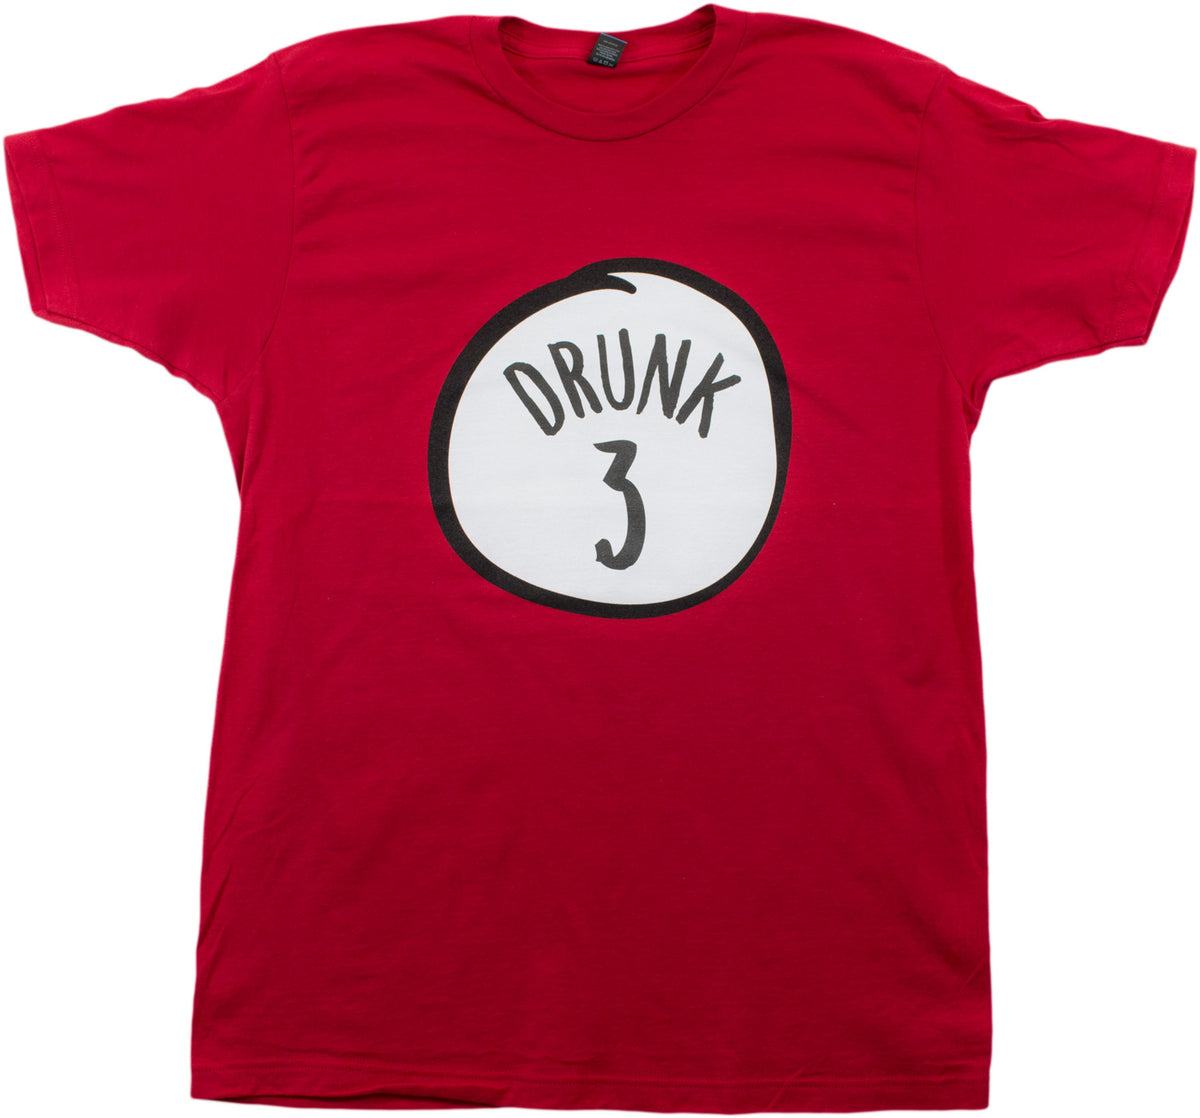 Drunk 3 | Funny Drinking Team, Group Halloween Costume Unisex T-shirt